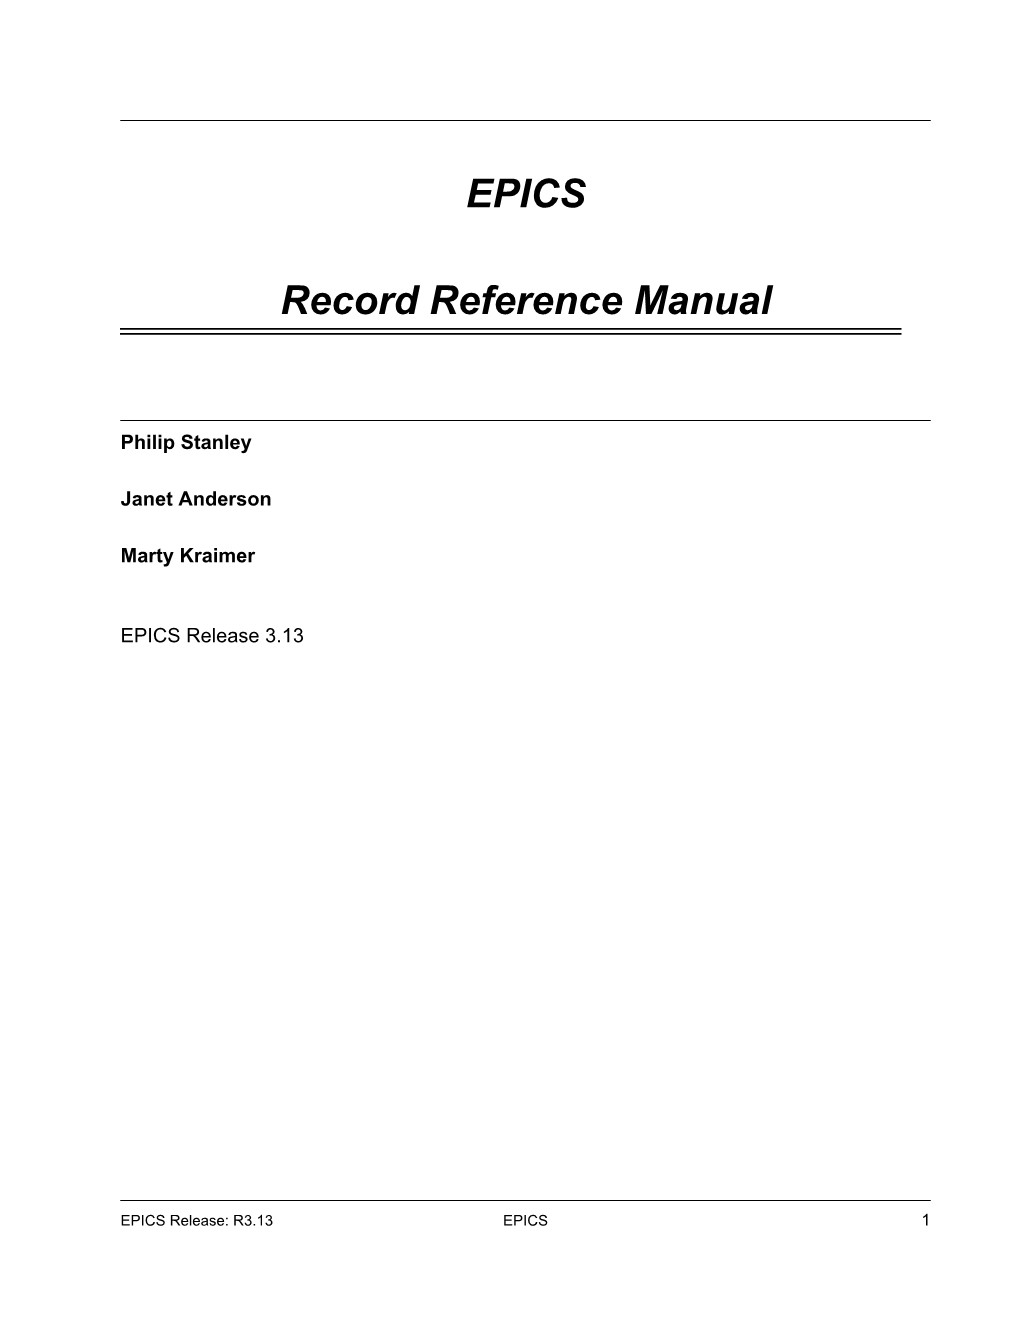 EPICS Record Reference Manual